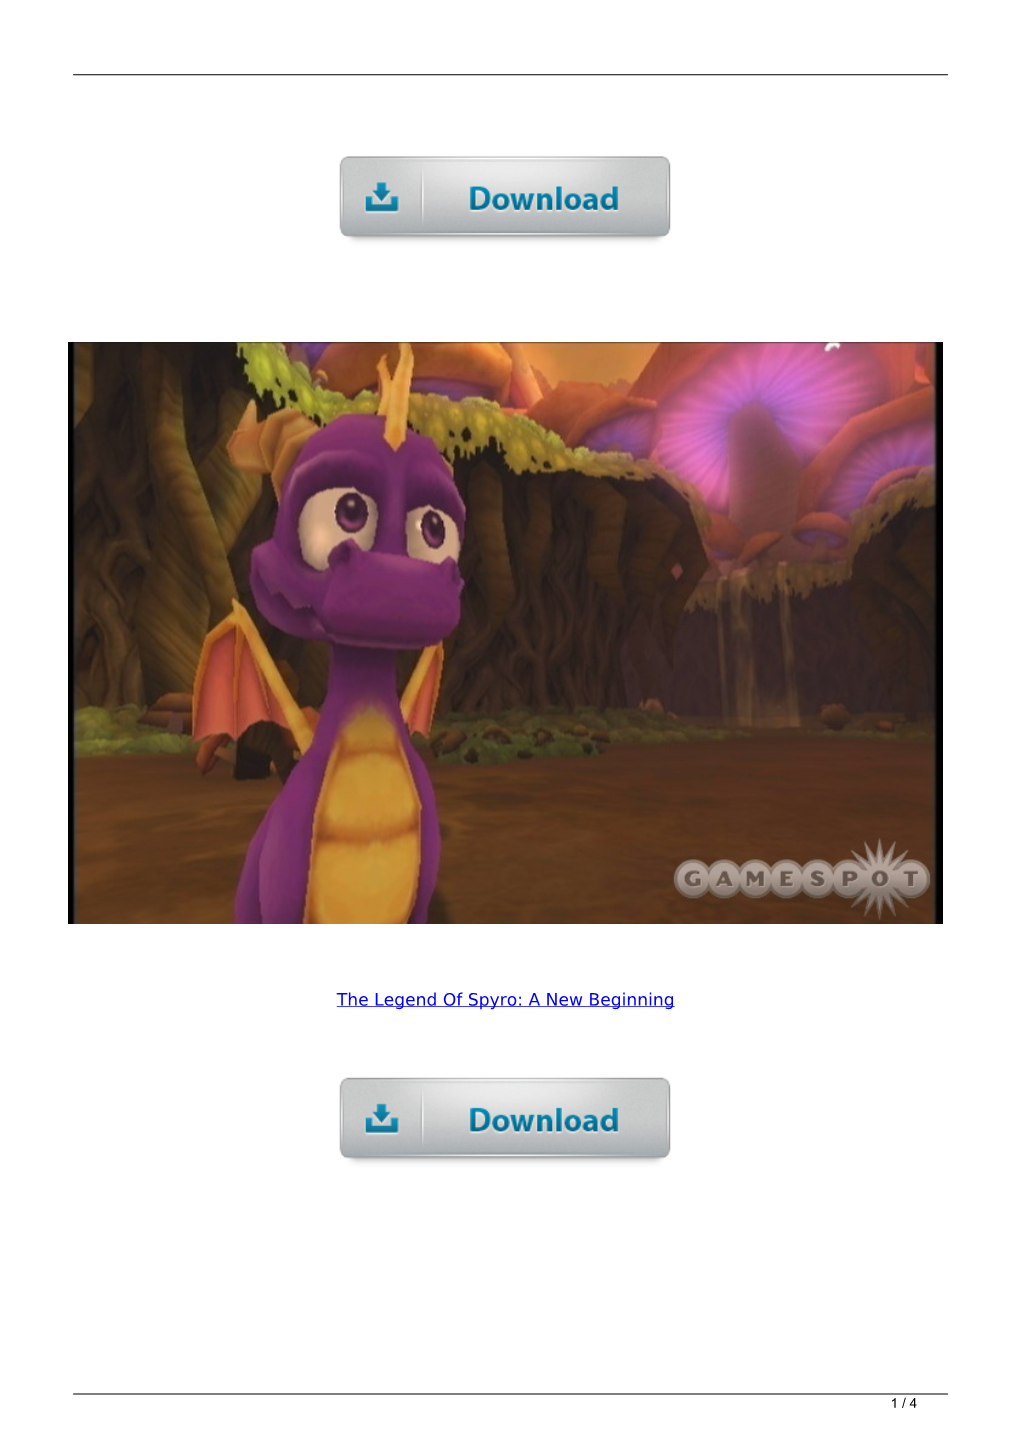 The Legend of Spyro: a New Beginning